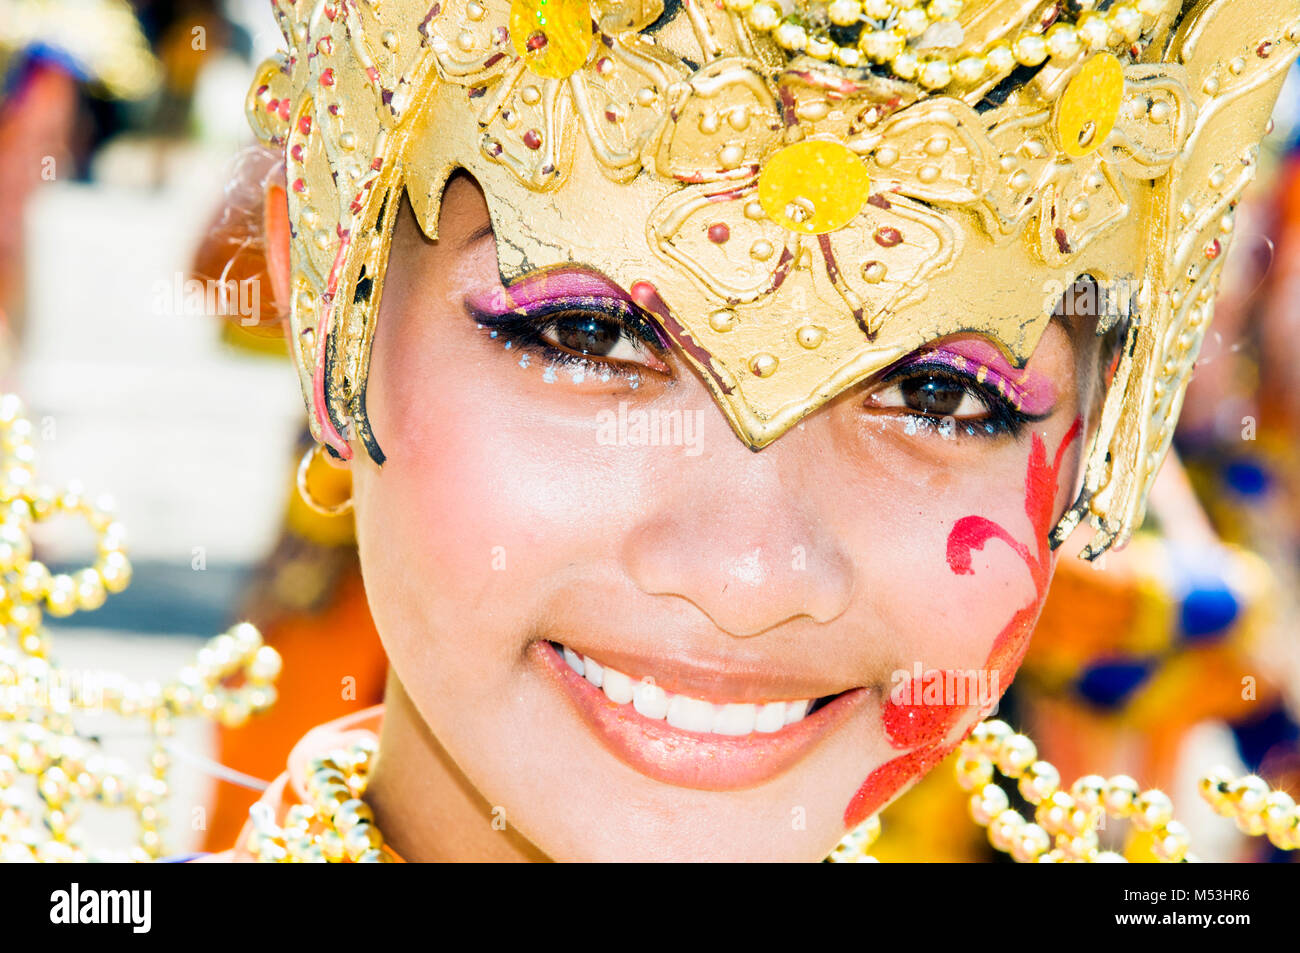 Pintaflores Festival, San Carlos, Negros Occidental, Philippines Stock Photo